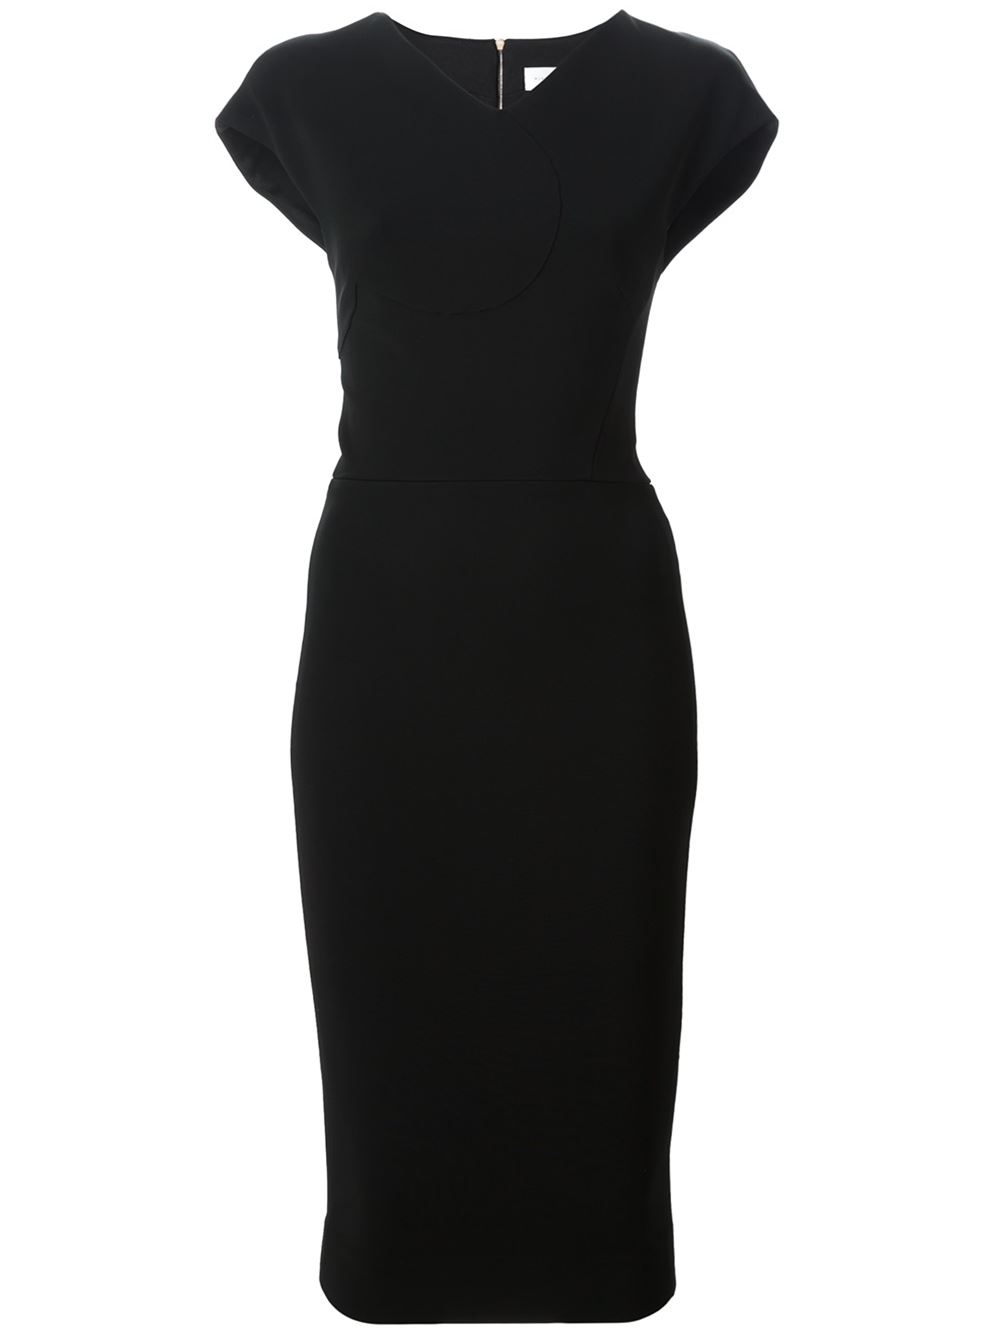 Victoria Beckham Zip Detail Fitted Dress in Black - Lyst